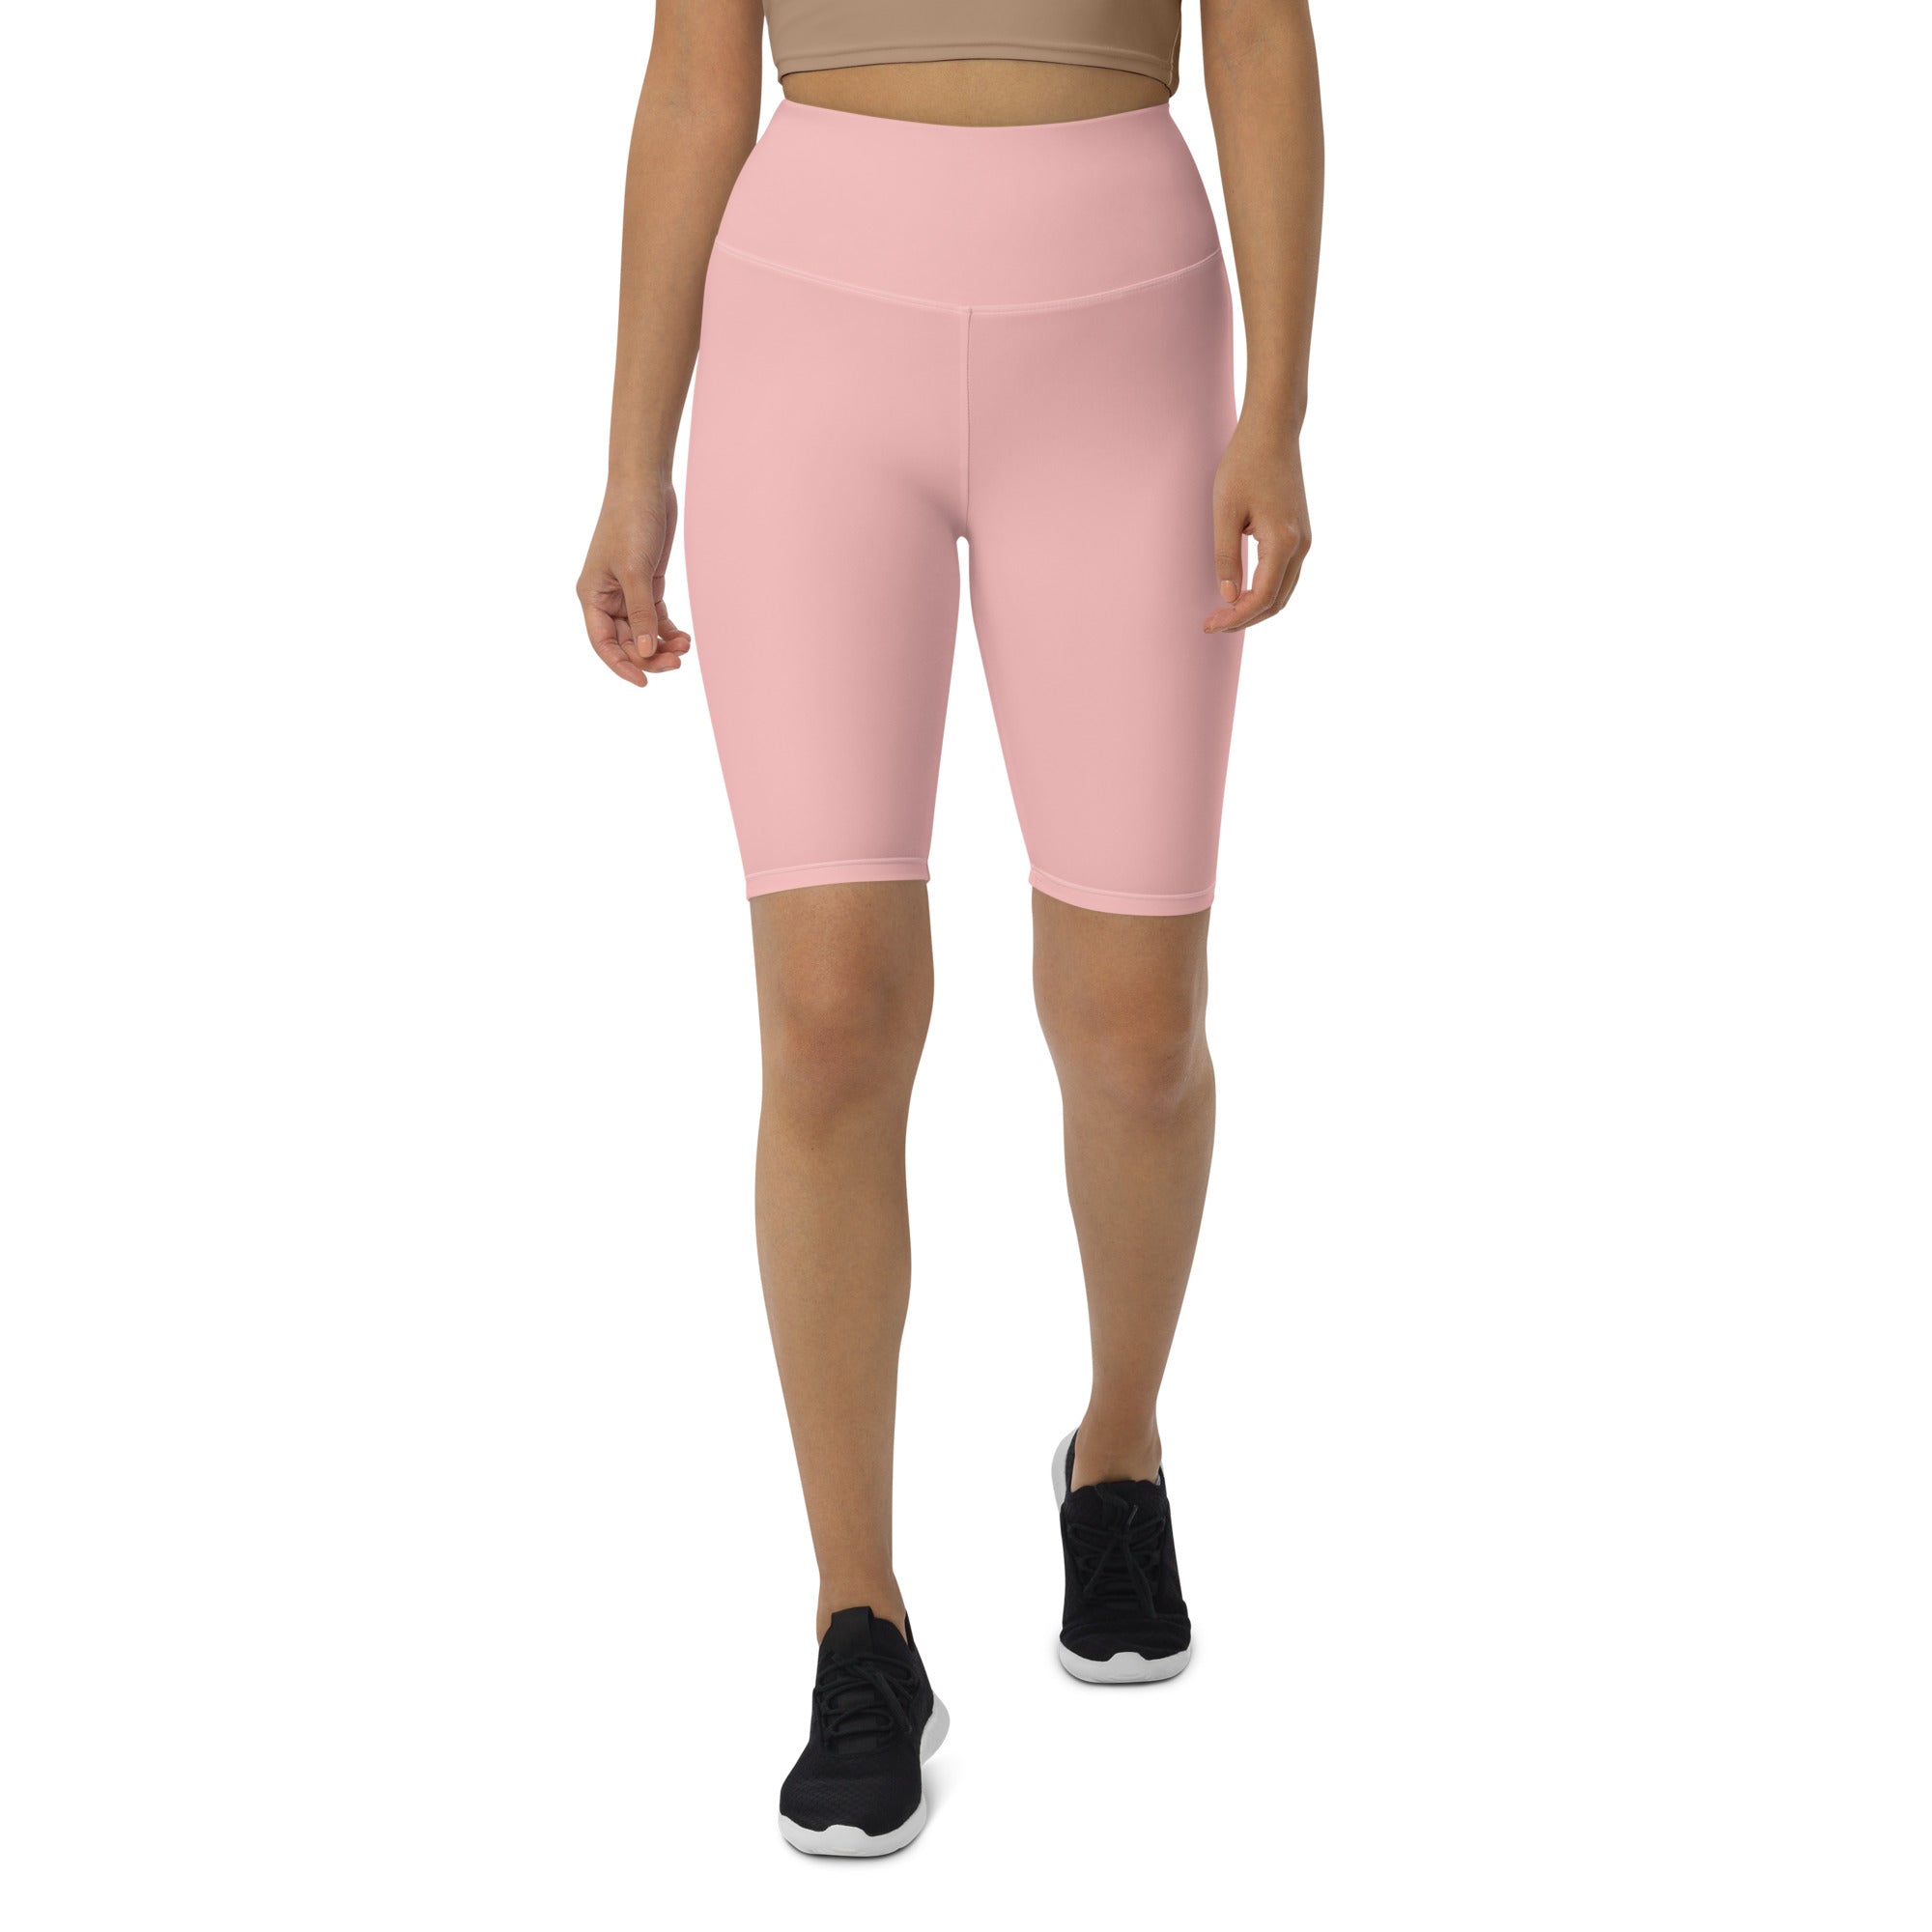 Lovable Cuties Pink Biker Shorts